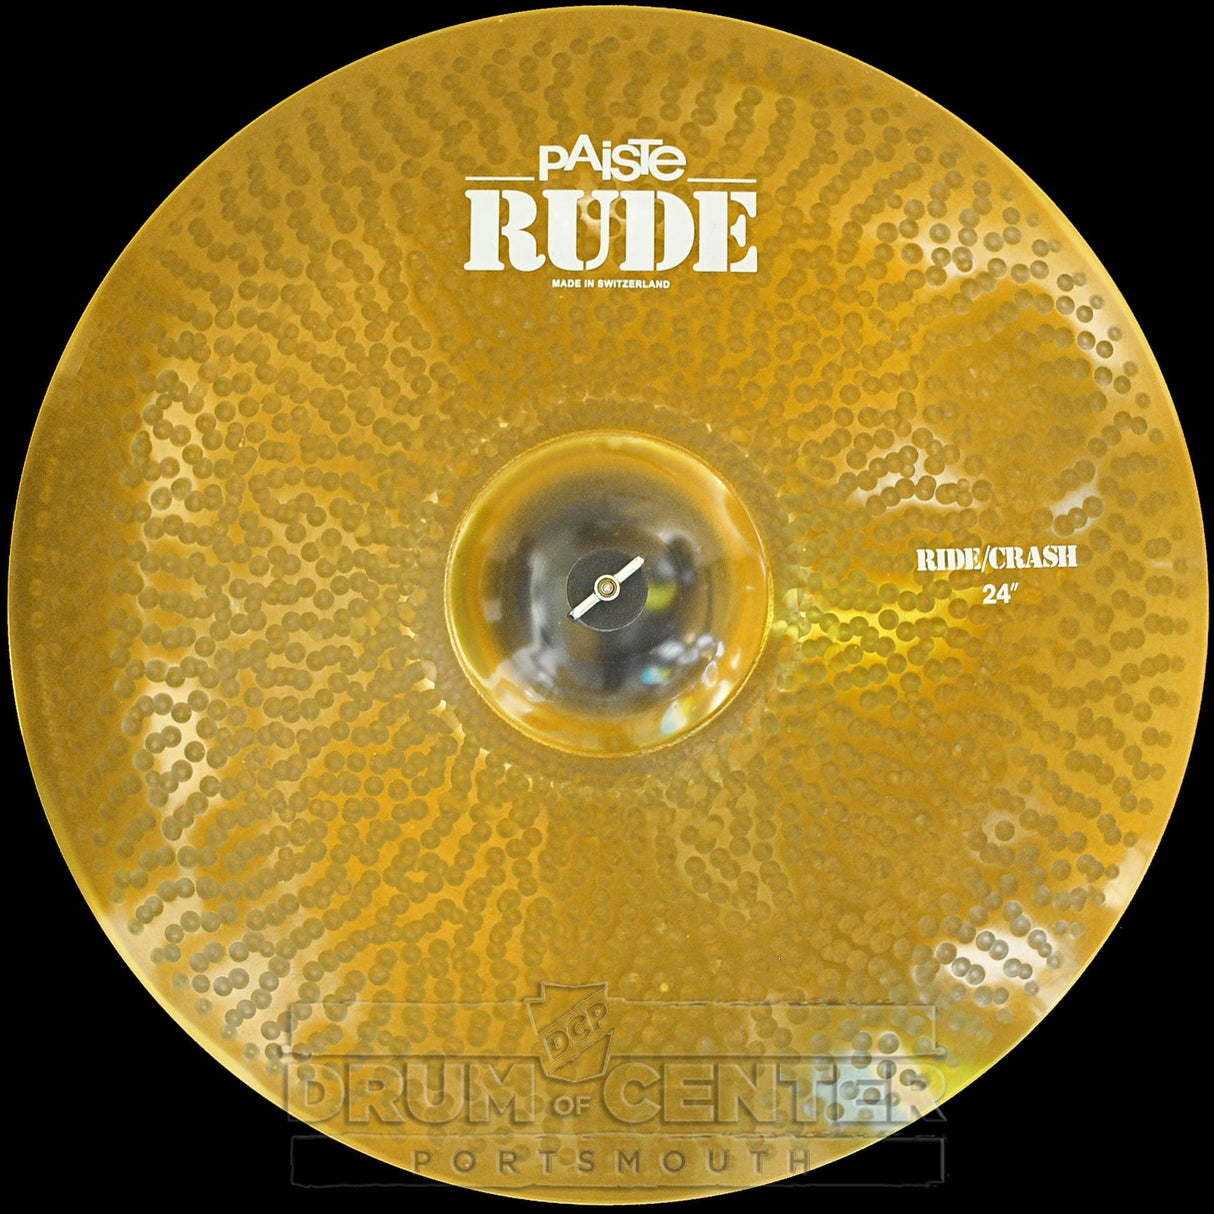 Paiste Rude Ride/Crash Cymbal 24" CUSTOM